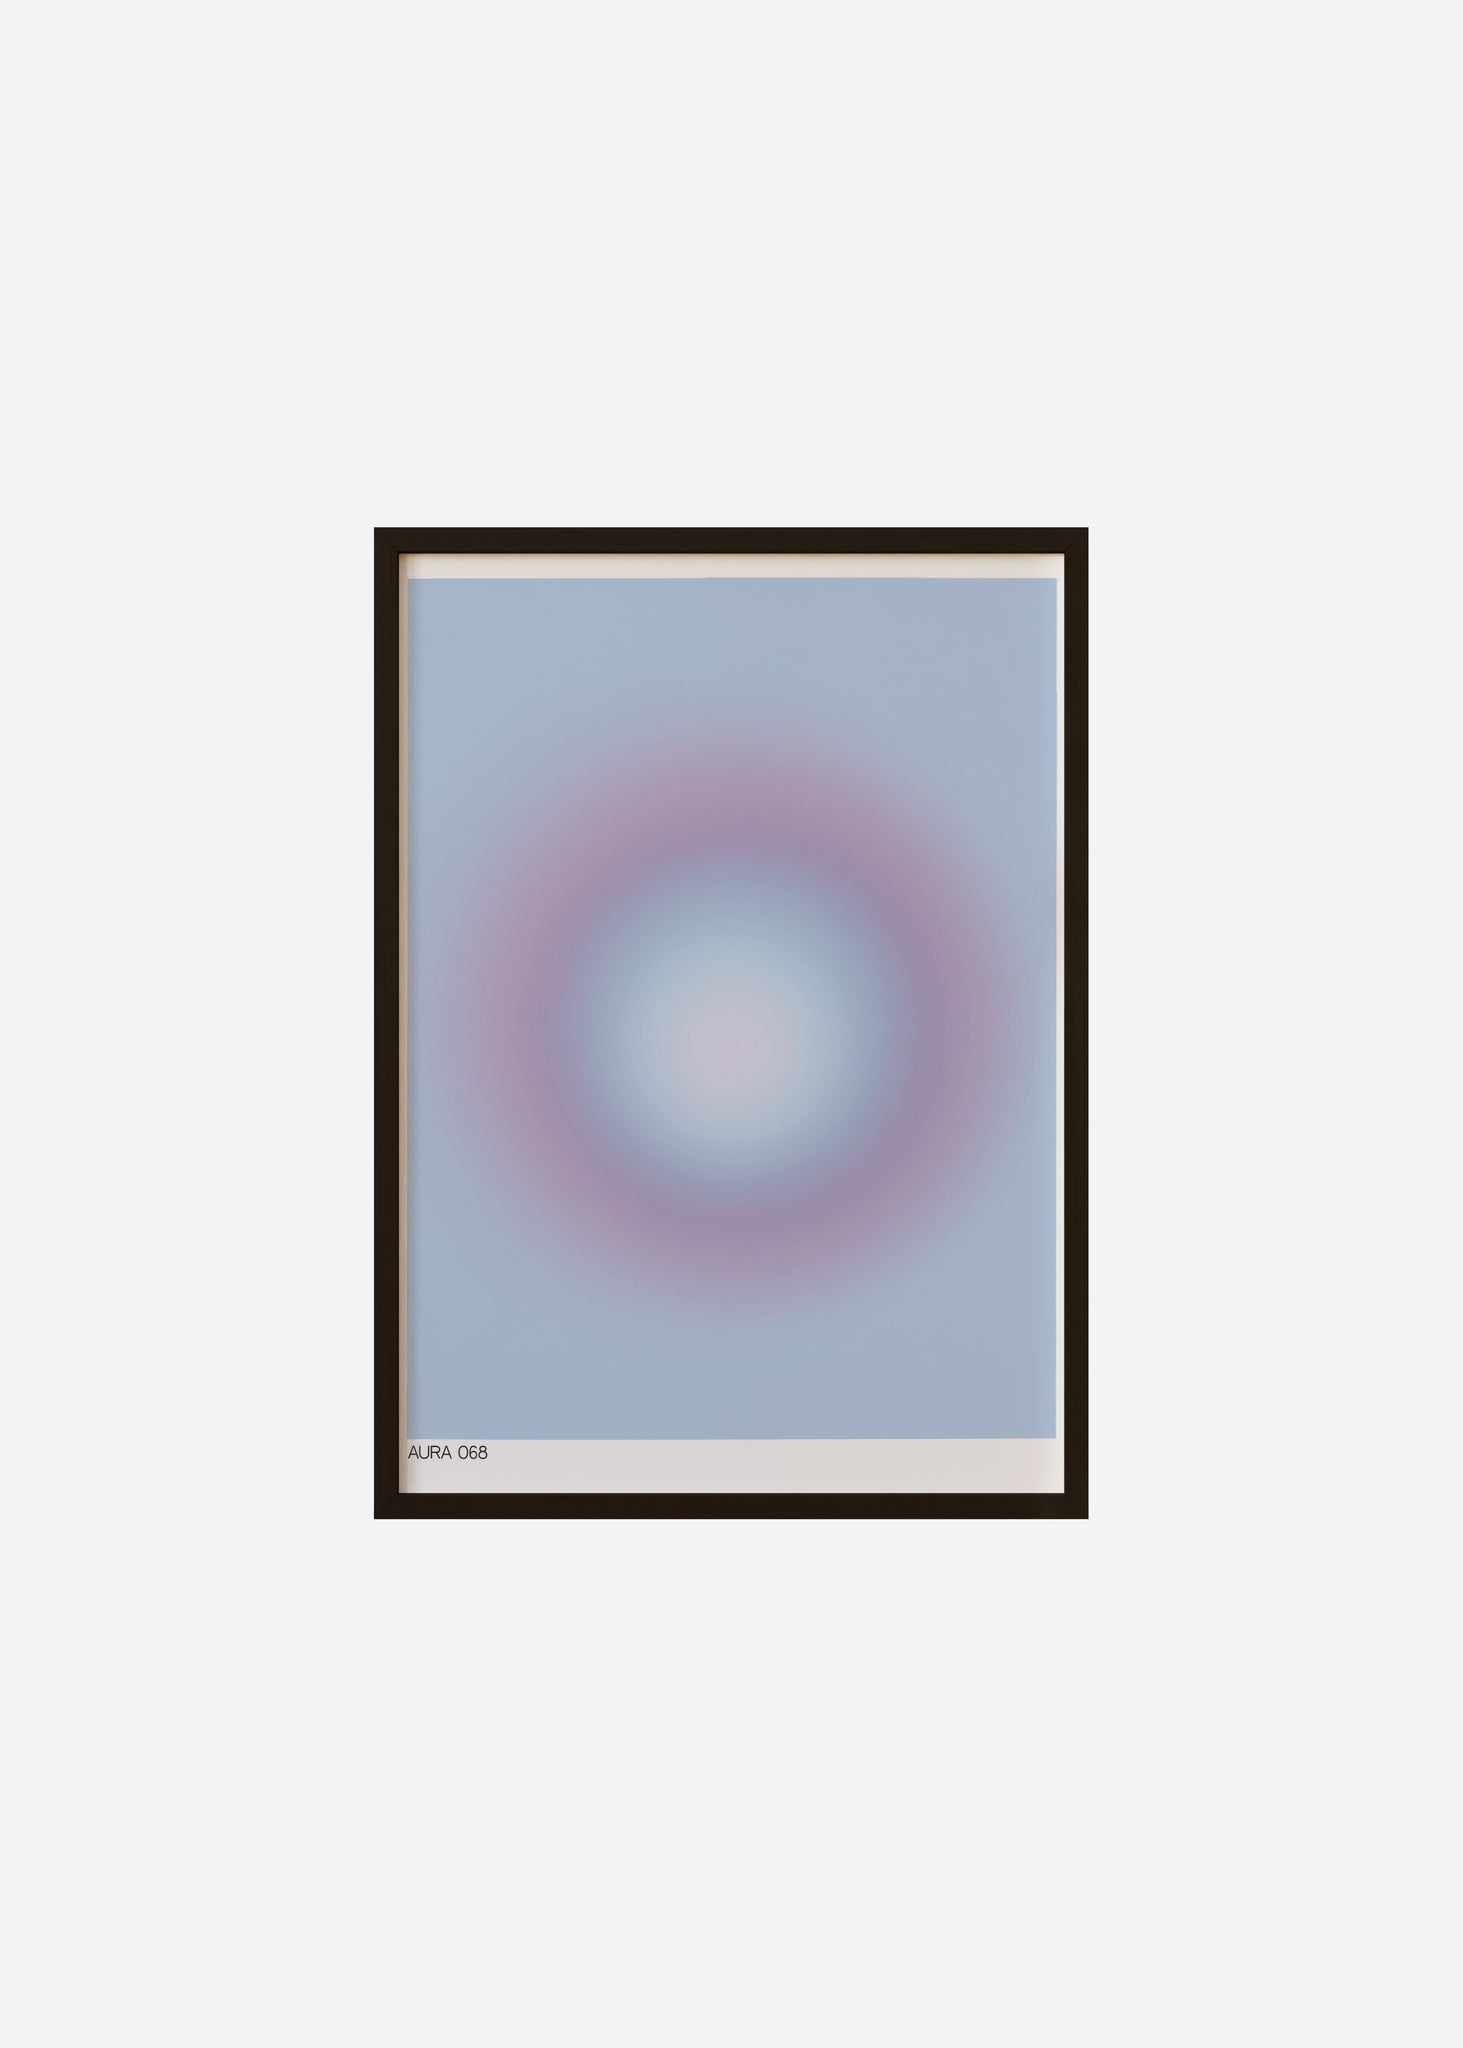 aura 068 Framed Print